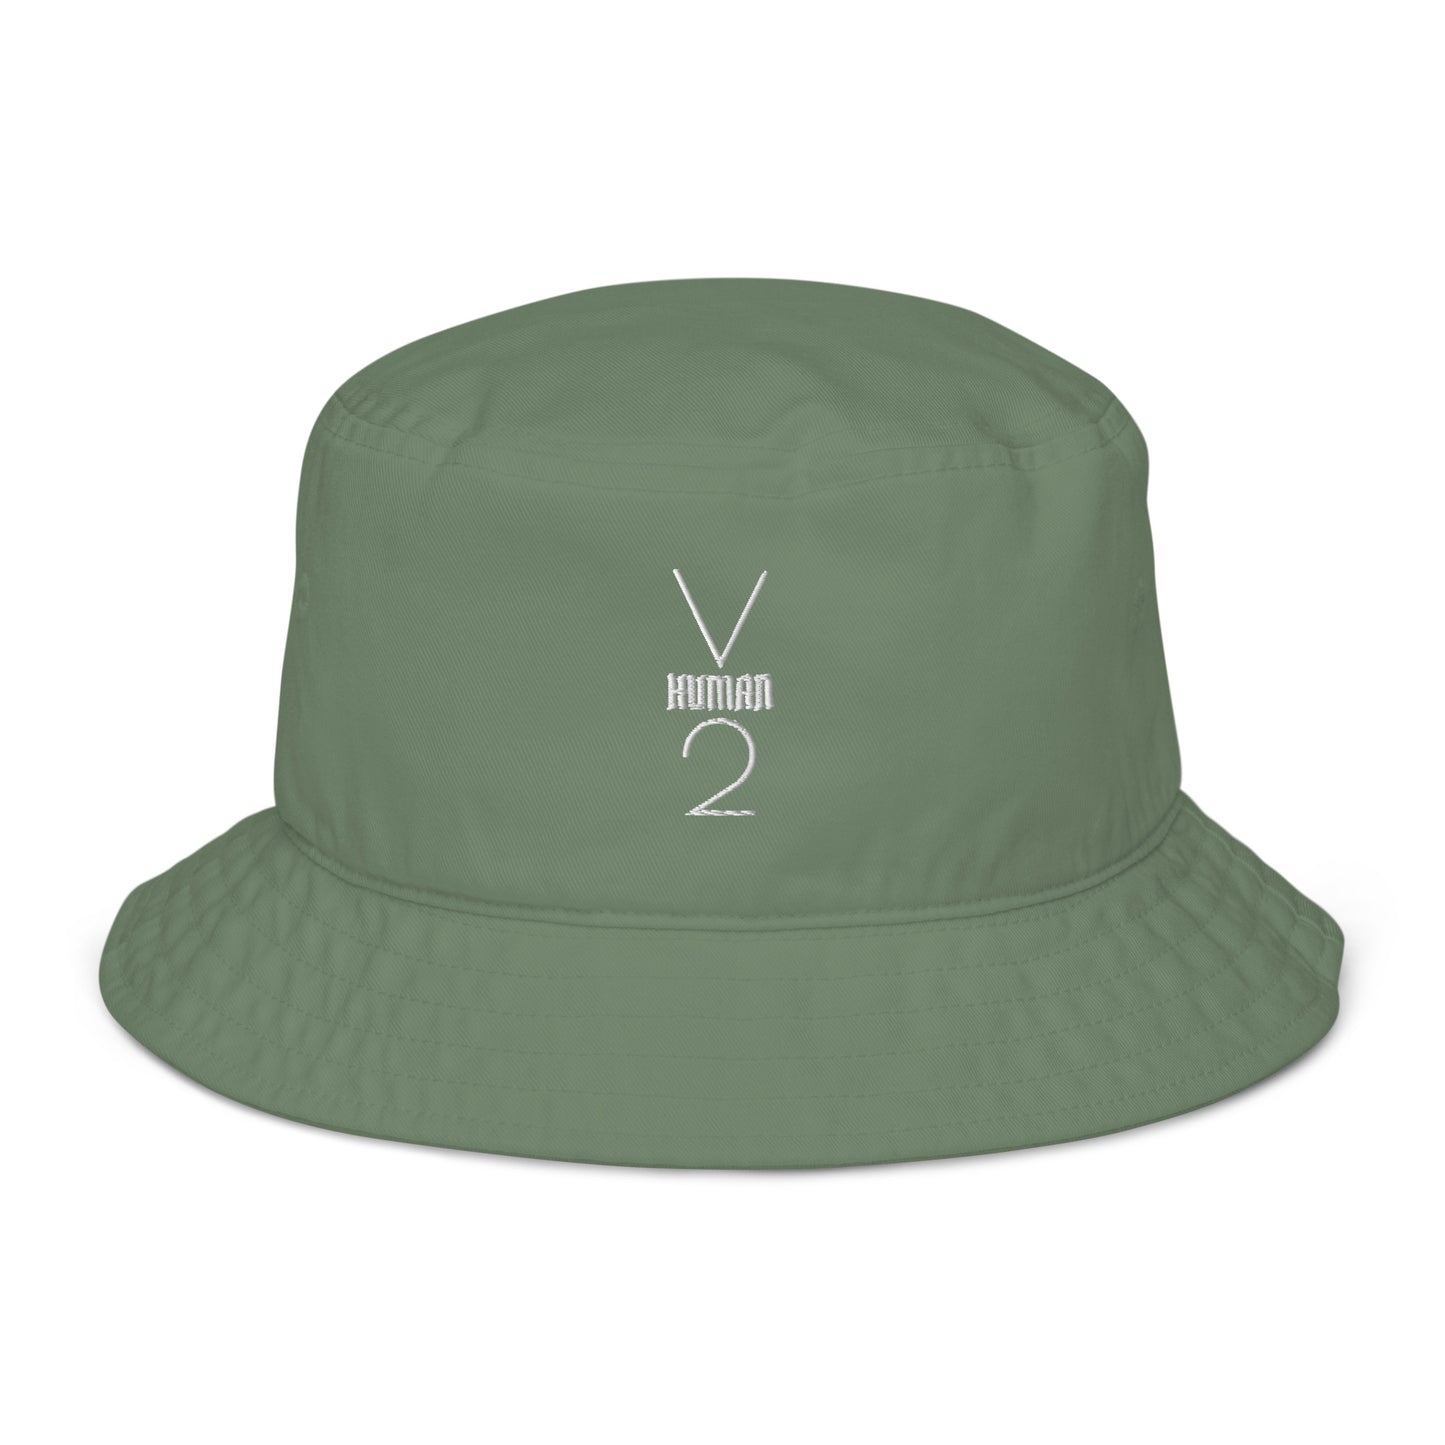 "Human V2" Organic bucket hat